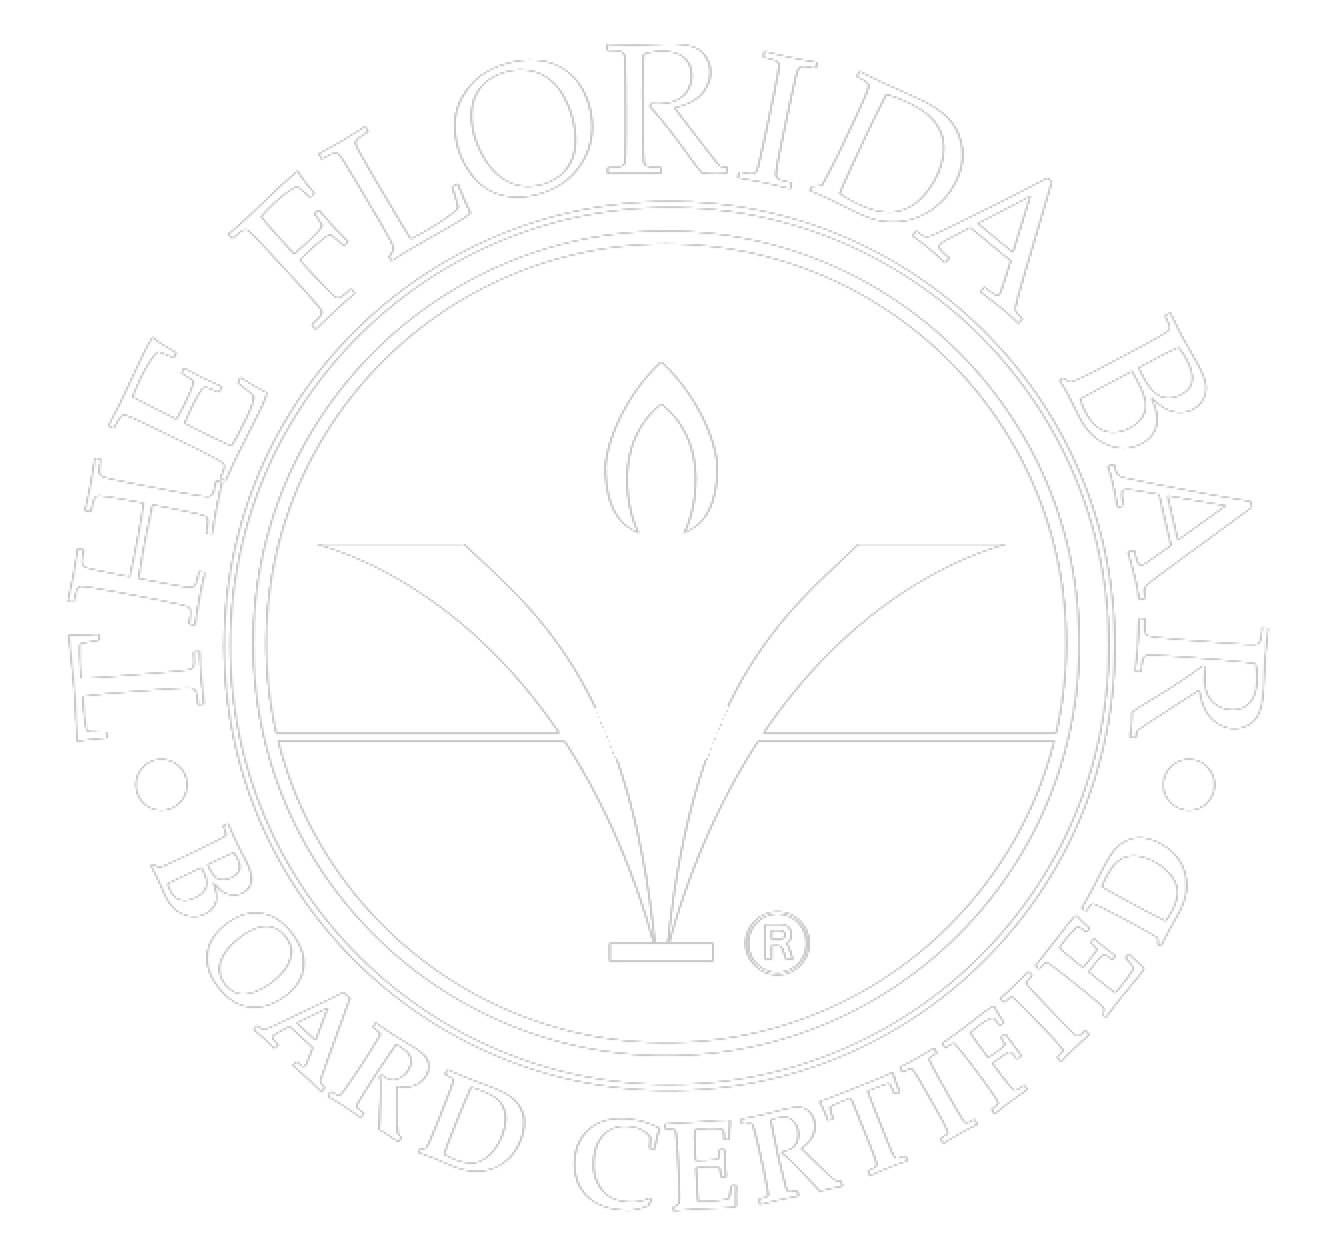 Board Certified Logo - The Florida Bar